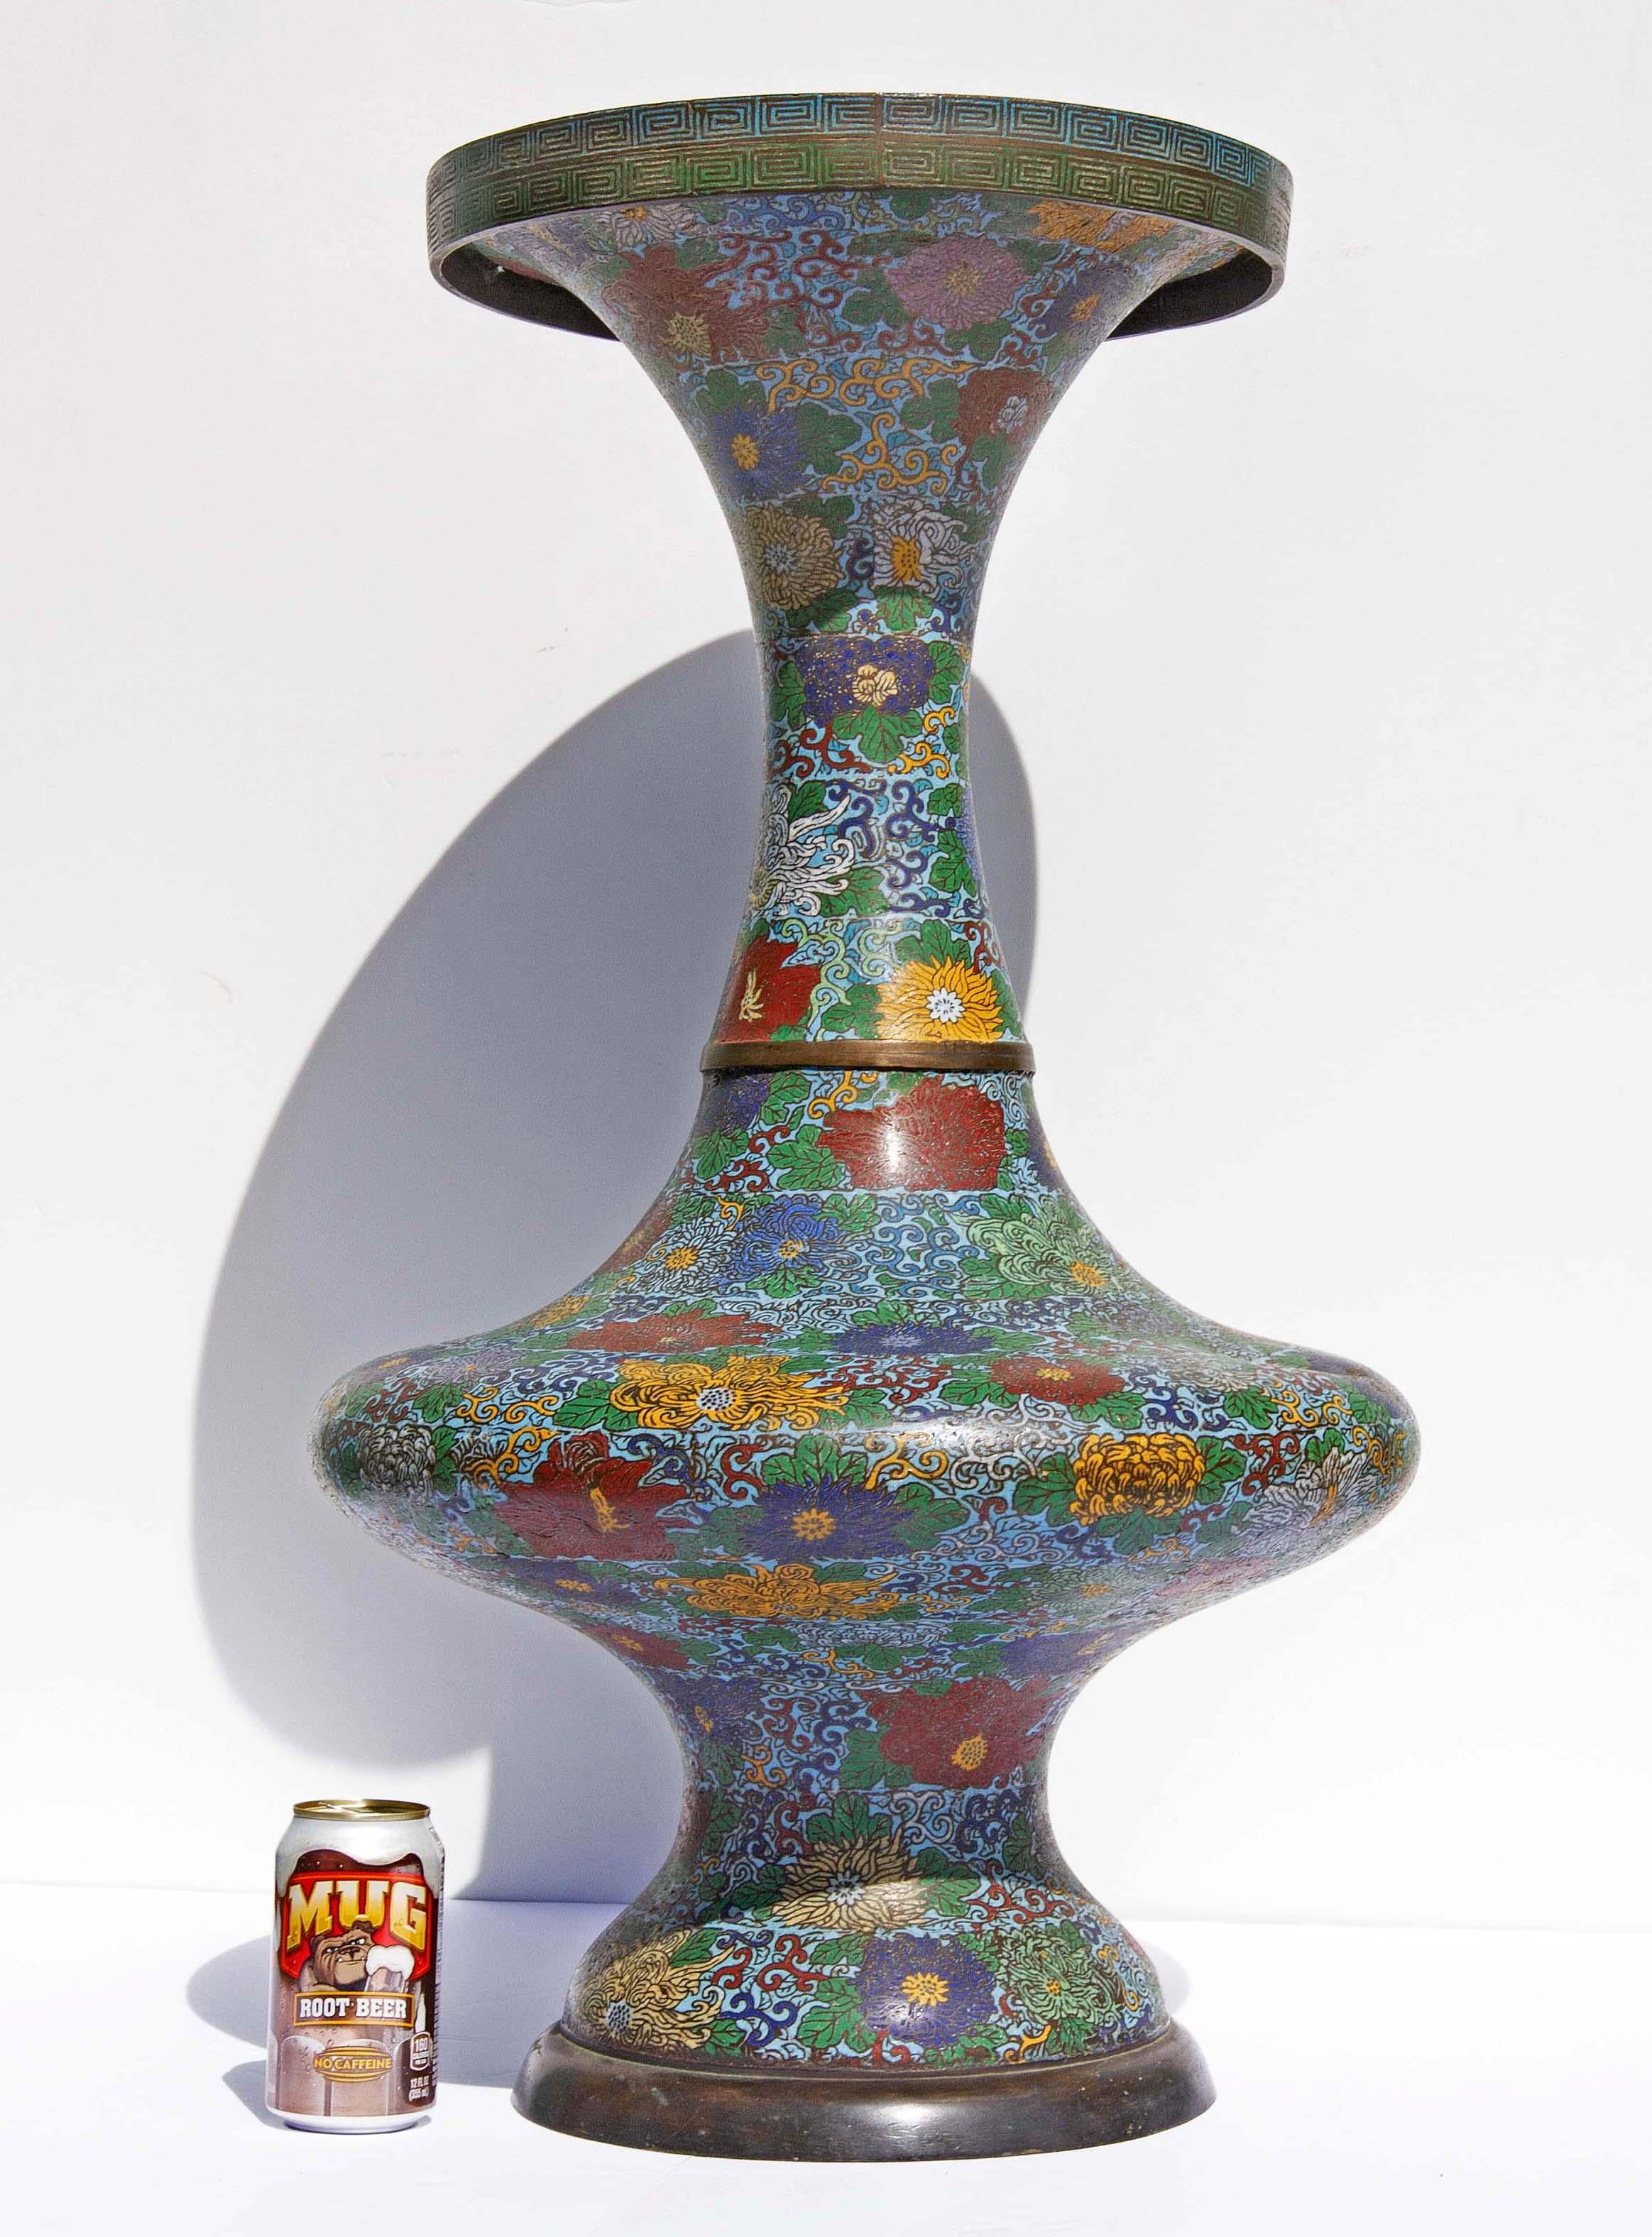 Antique monumental cloisonné floor vase. An exotic form with colorful enamel. Japanese Meiji period. Late 19th century. Enamel on bronze. Measure: 31